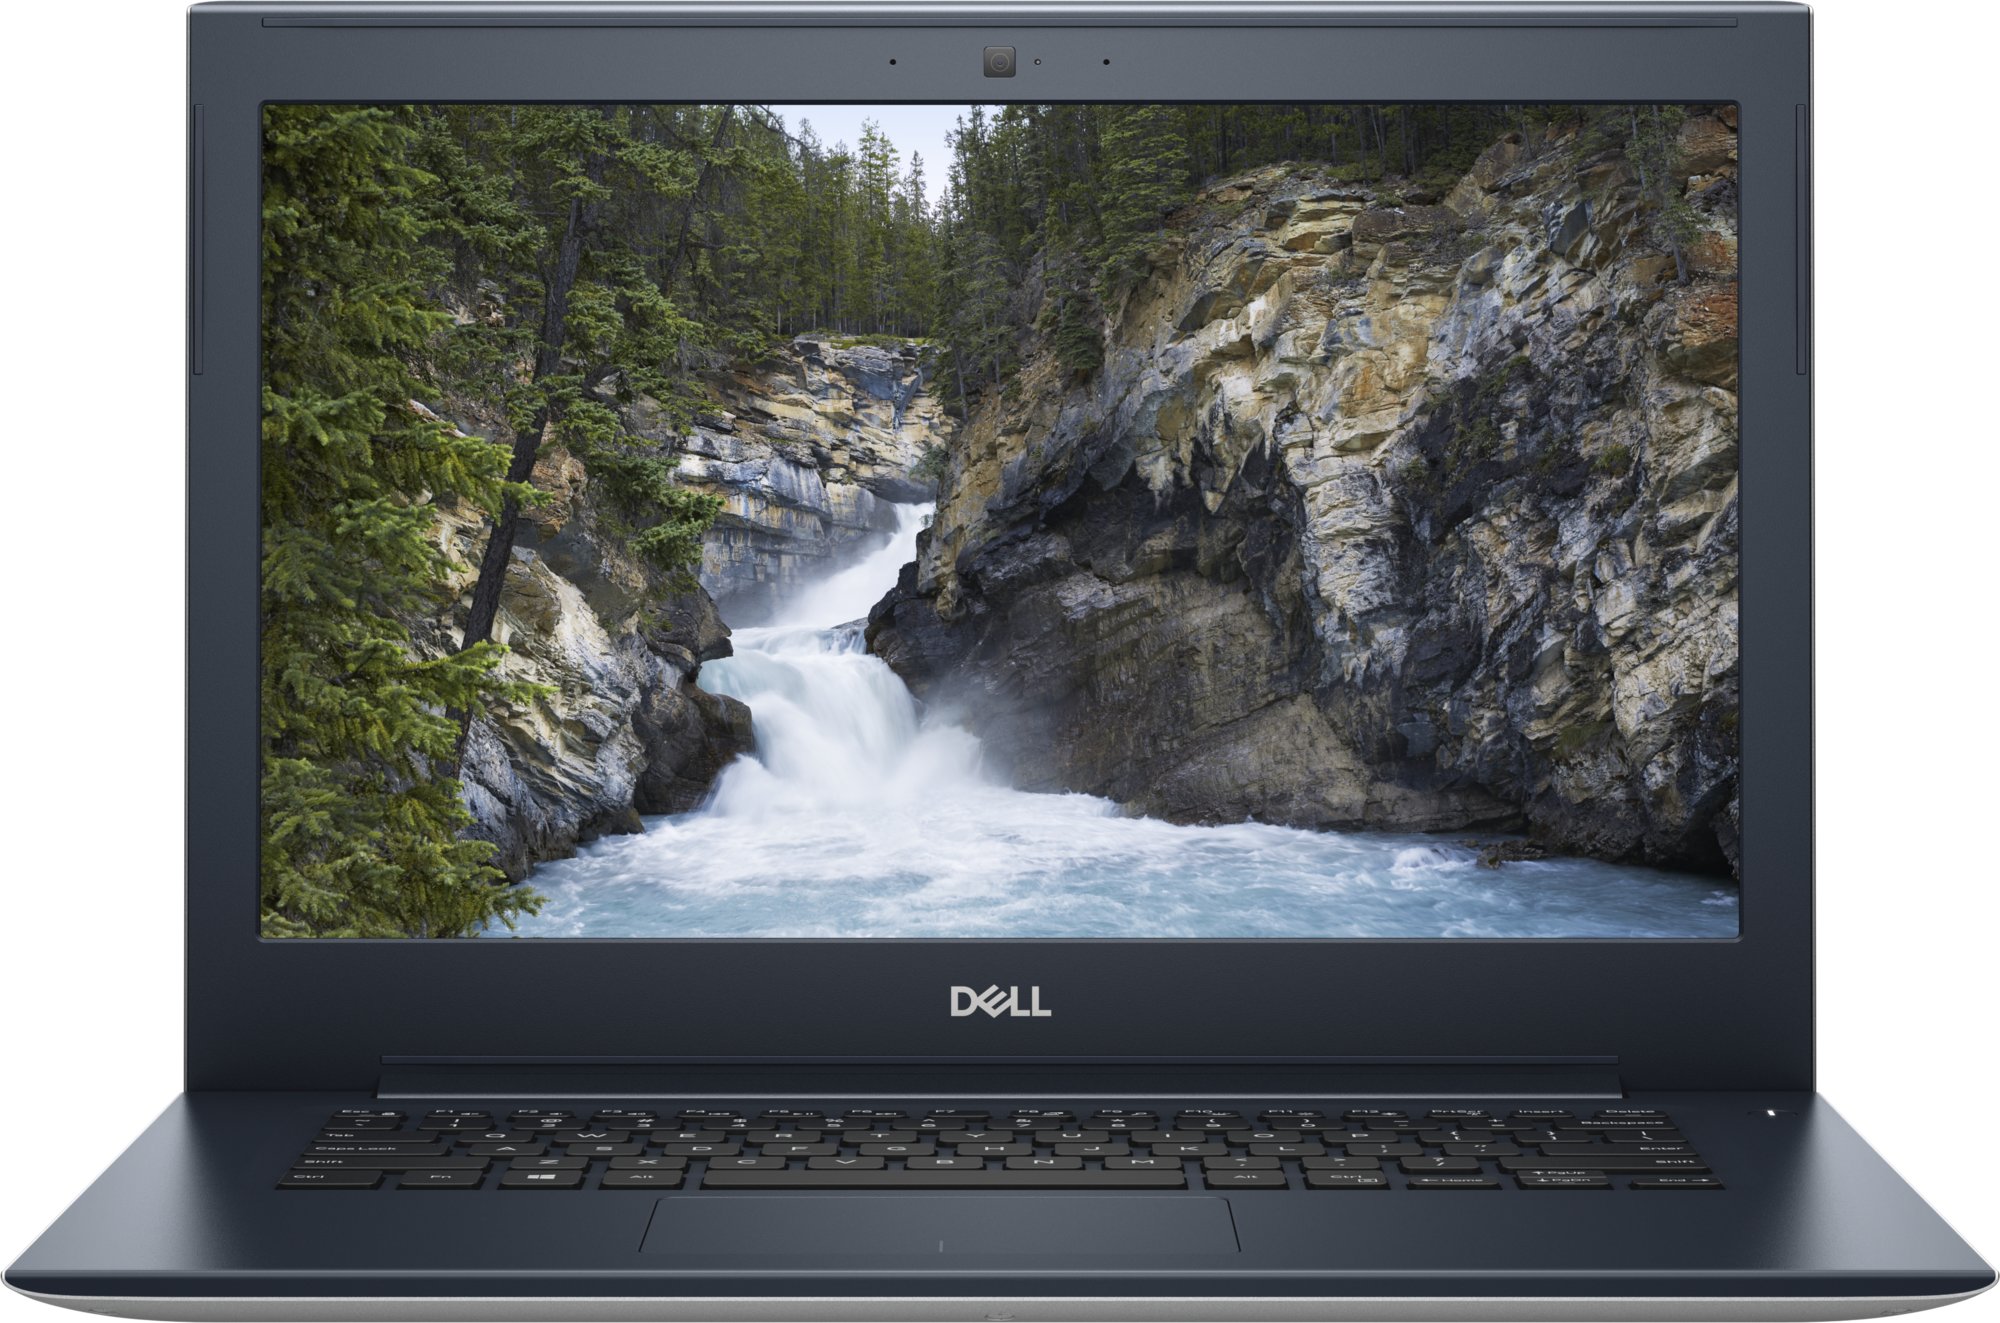 Dell Vostro 14 5471 - Specs, Tests, and Prices | LaptopMedia.com